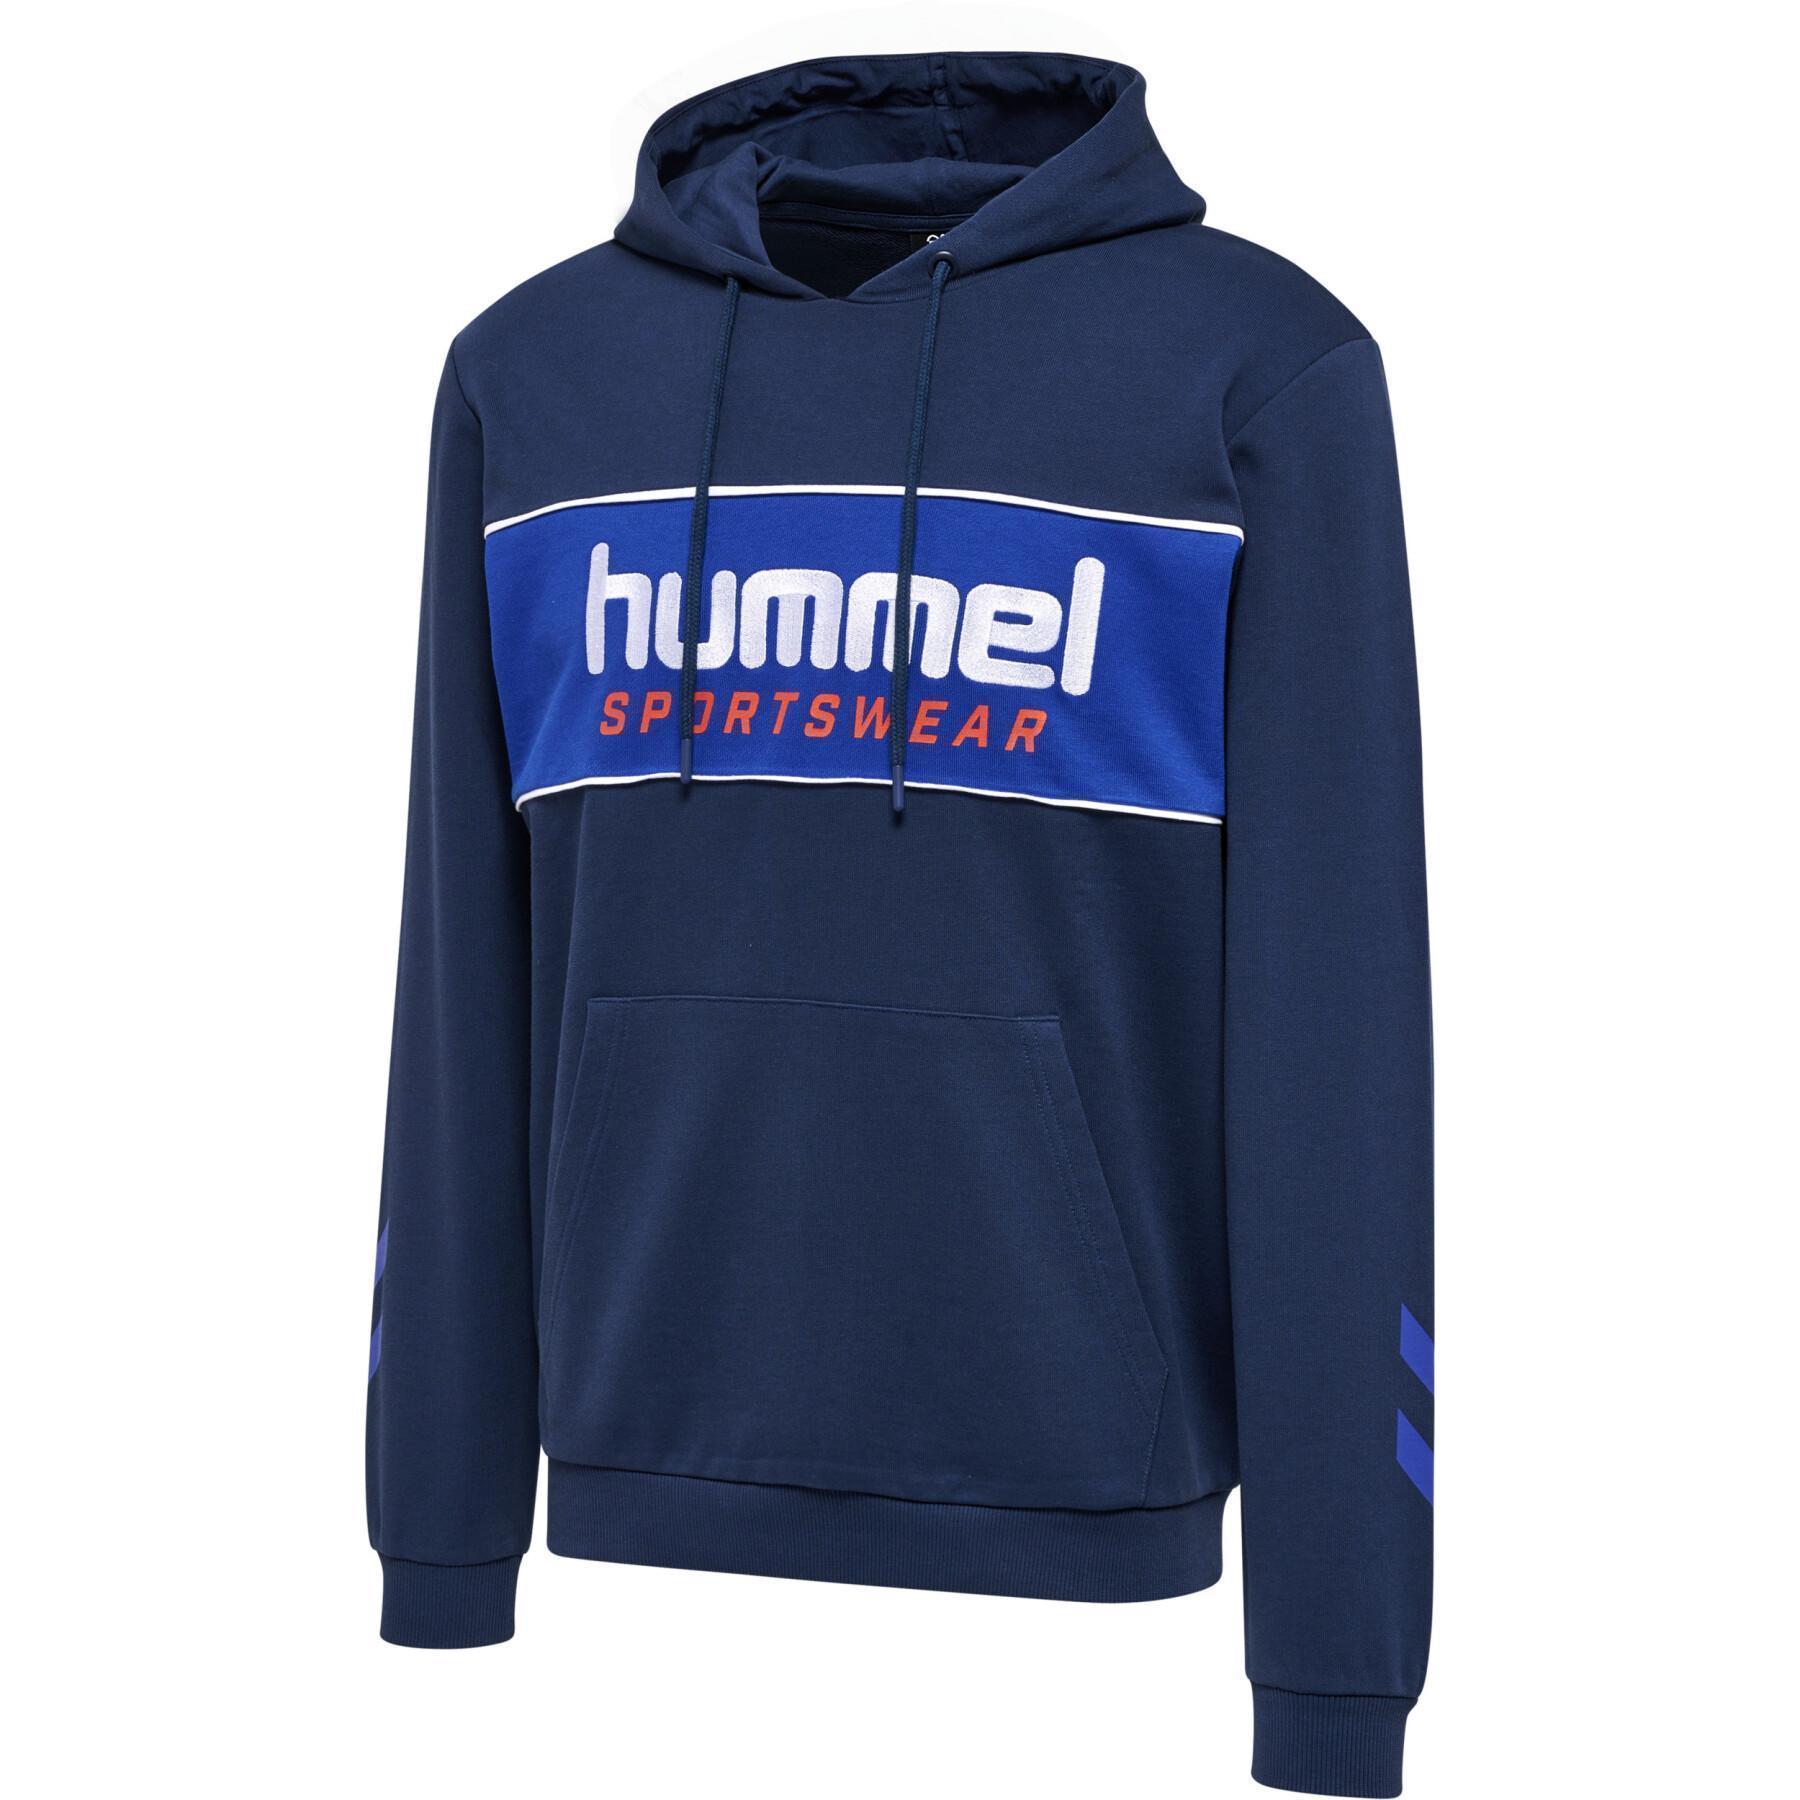 Hoodie - - Lifestyle Julian Hummel - Sweatshirts Legacy Lifestyle Woman